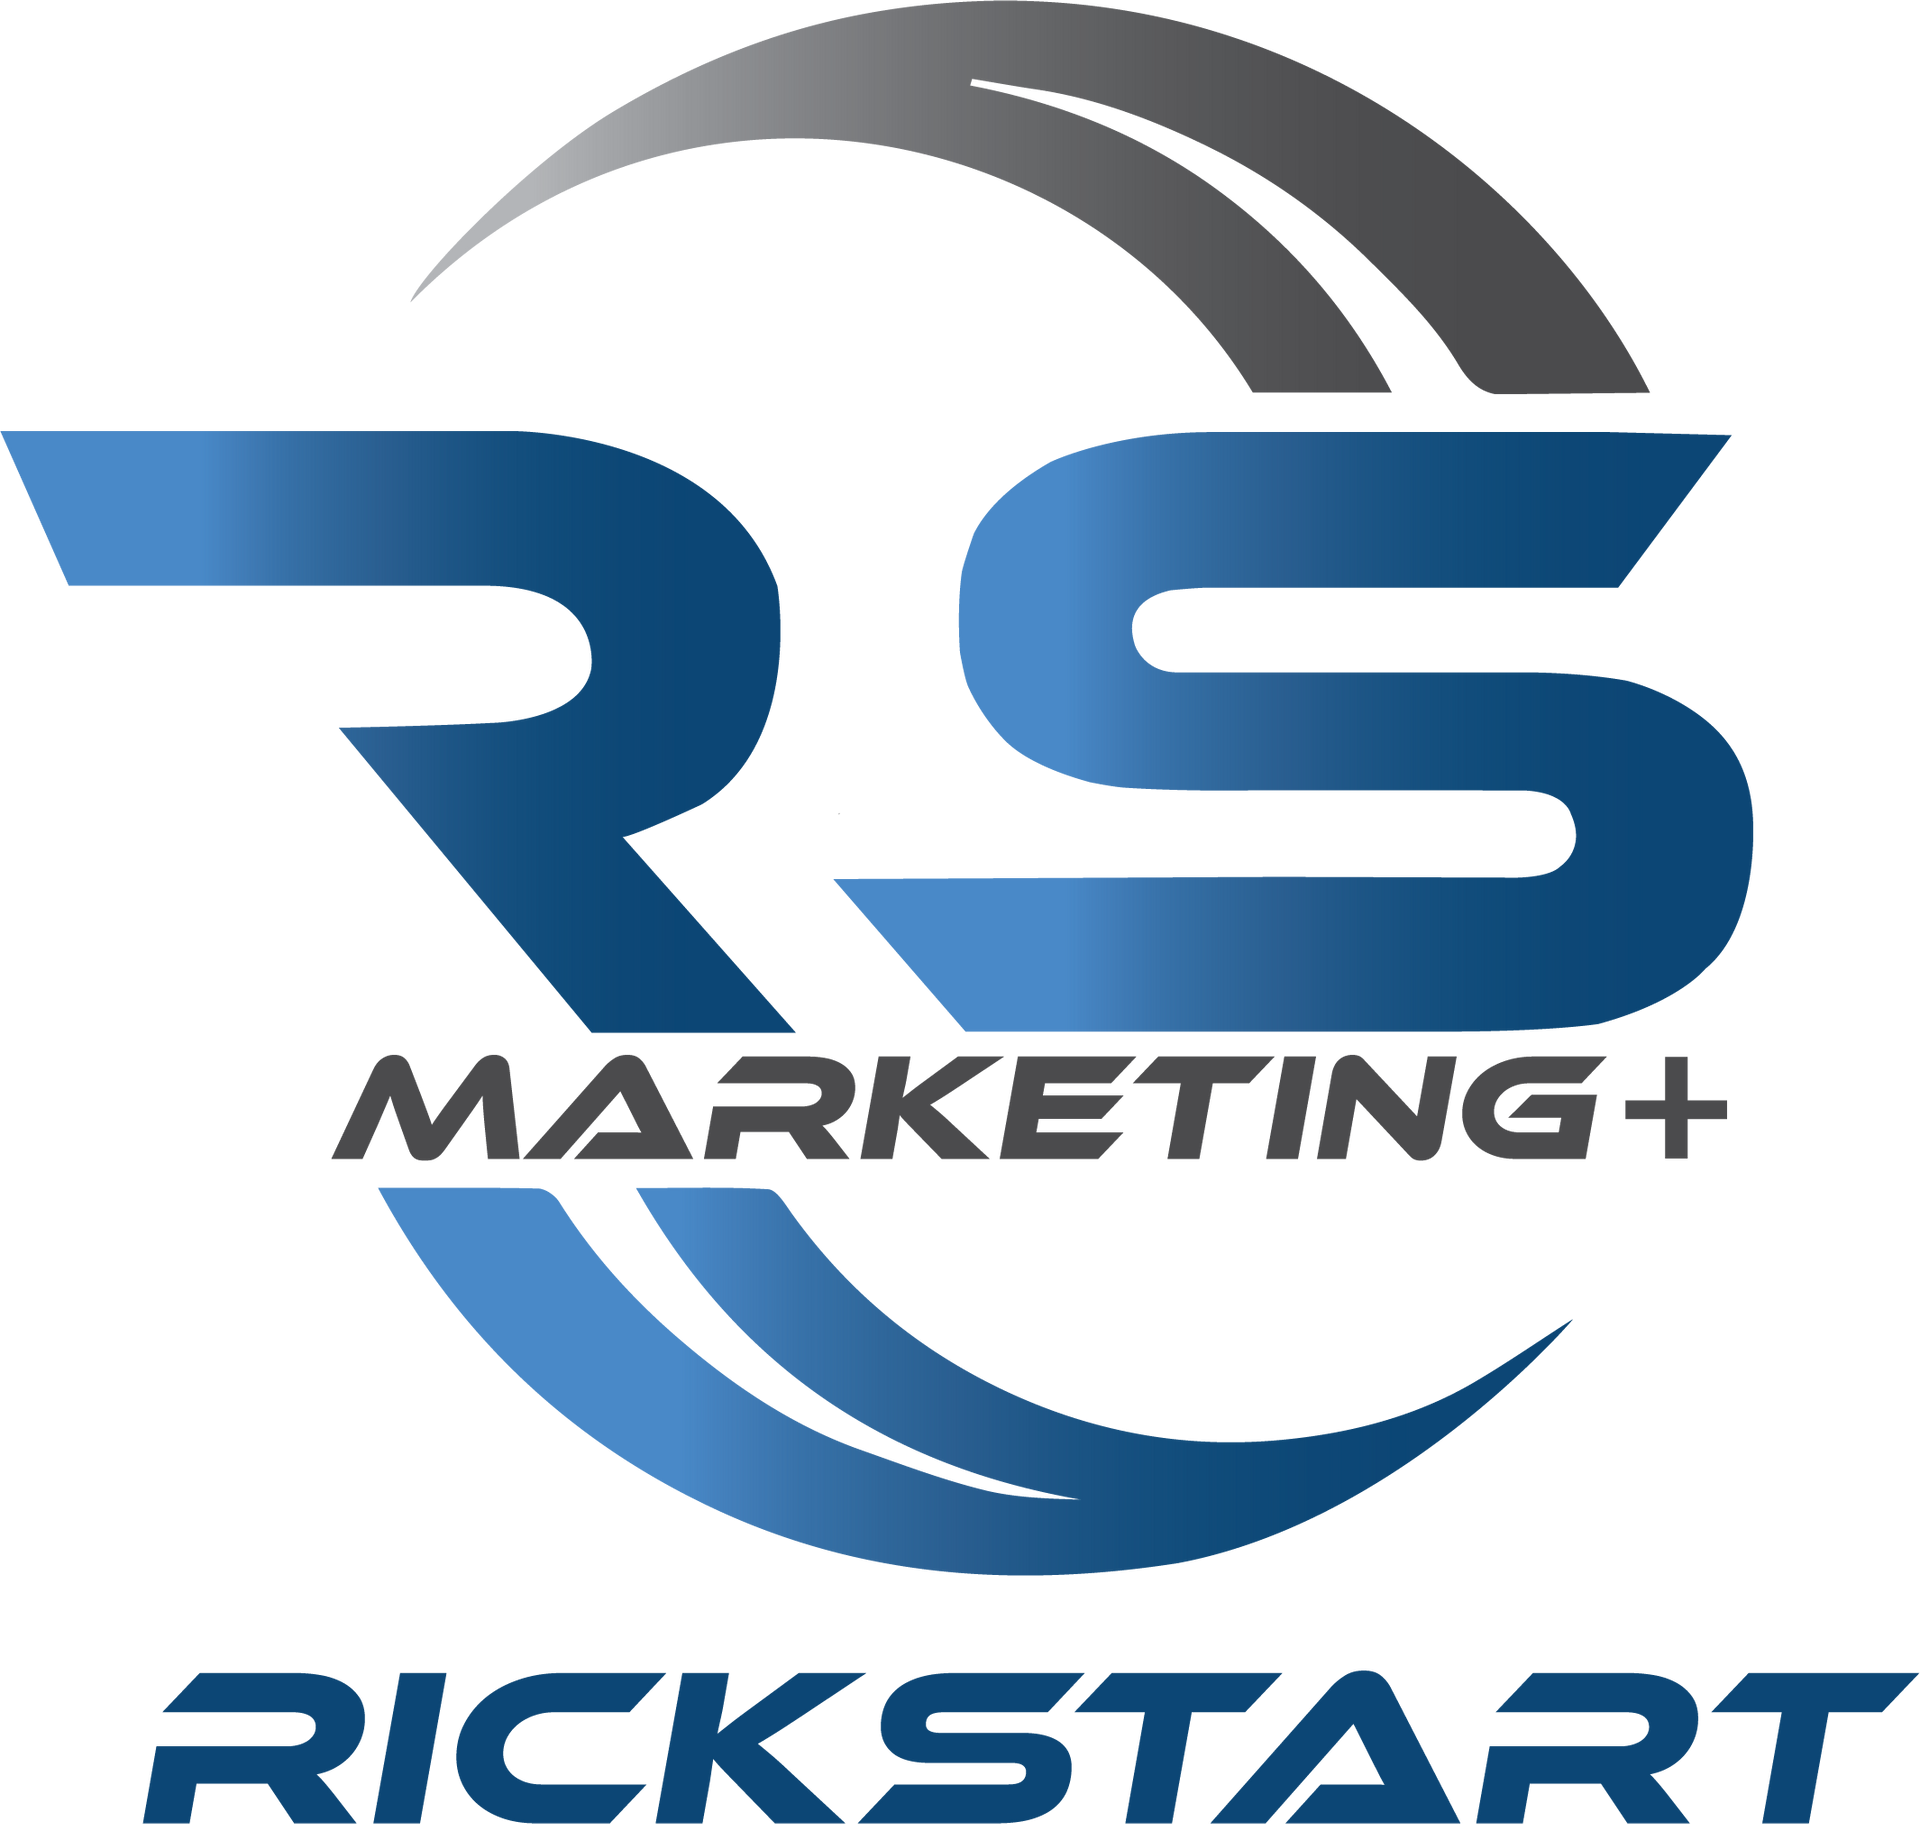 A logo for the marketing agency Rickstart Marketing+